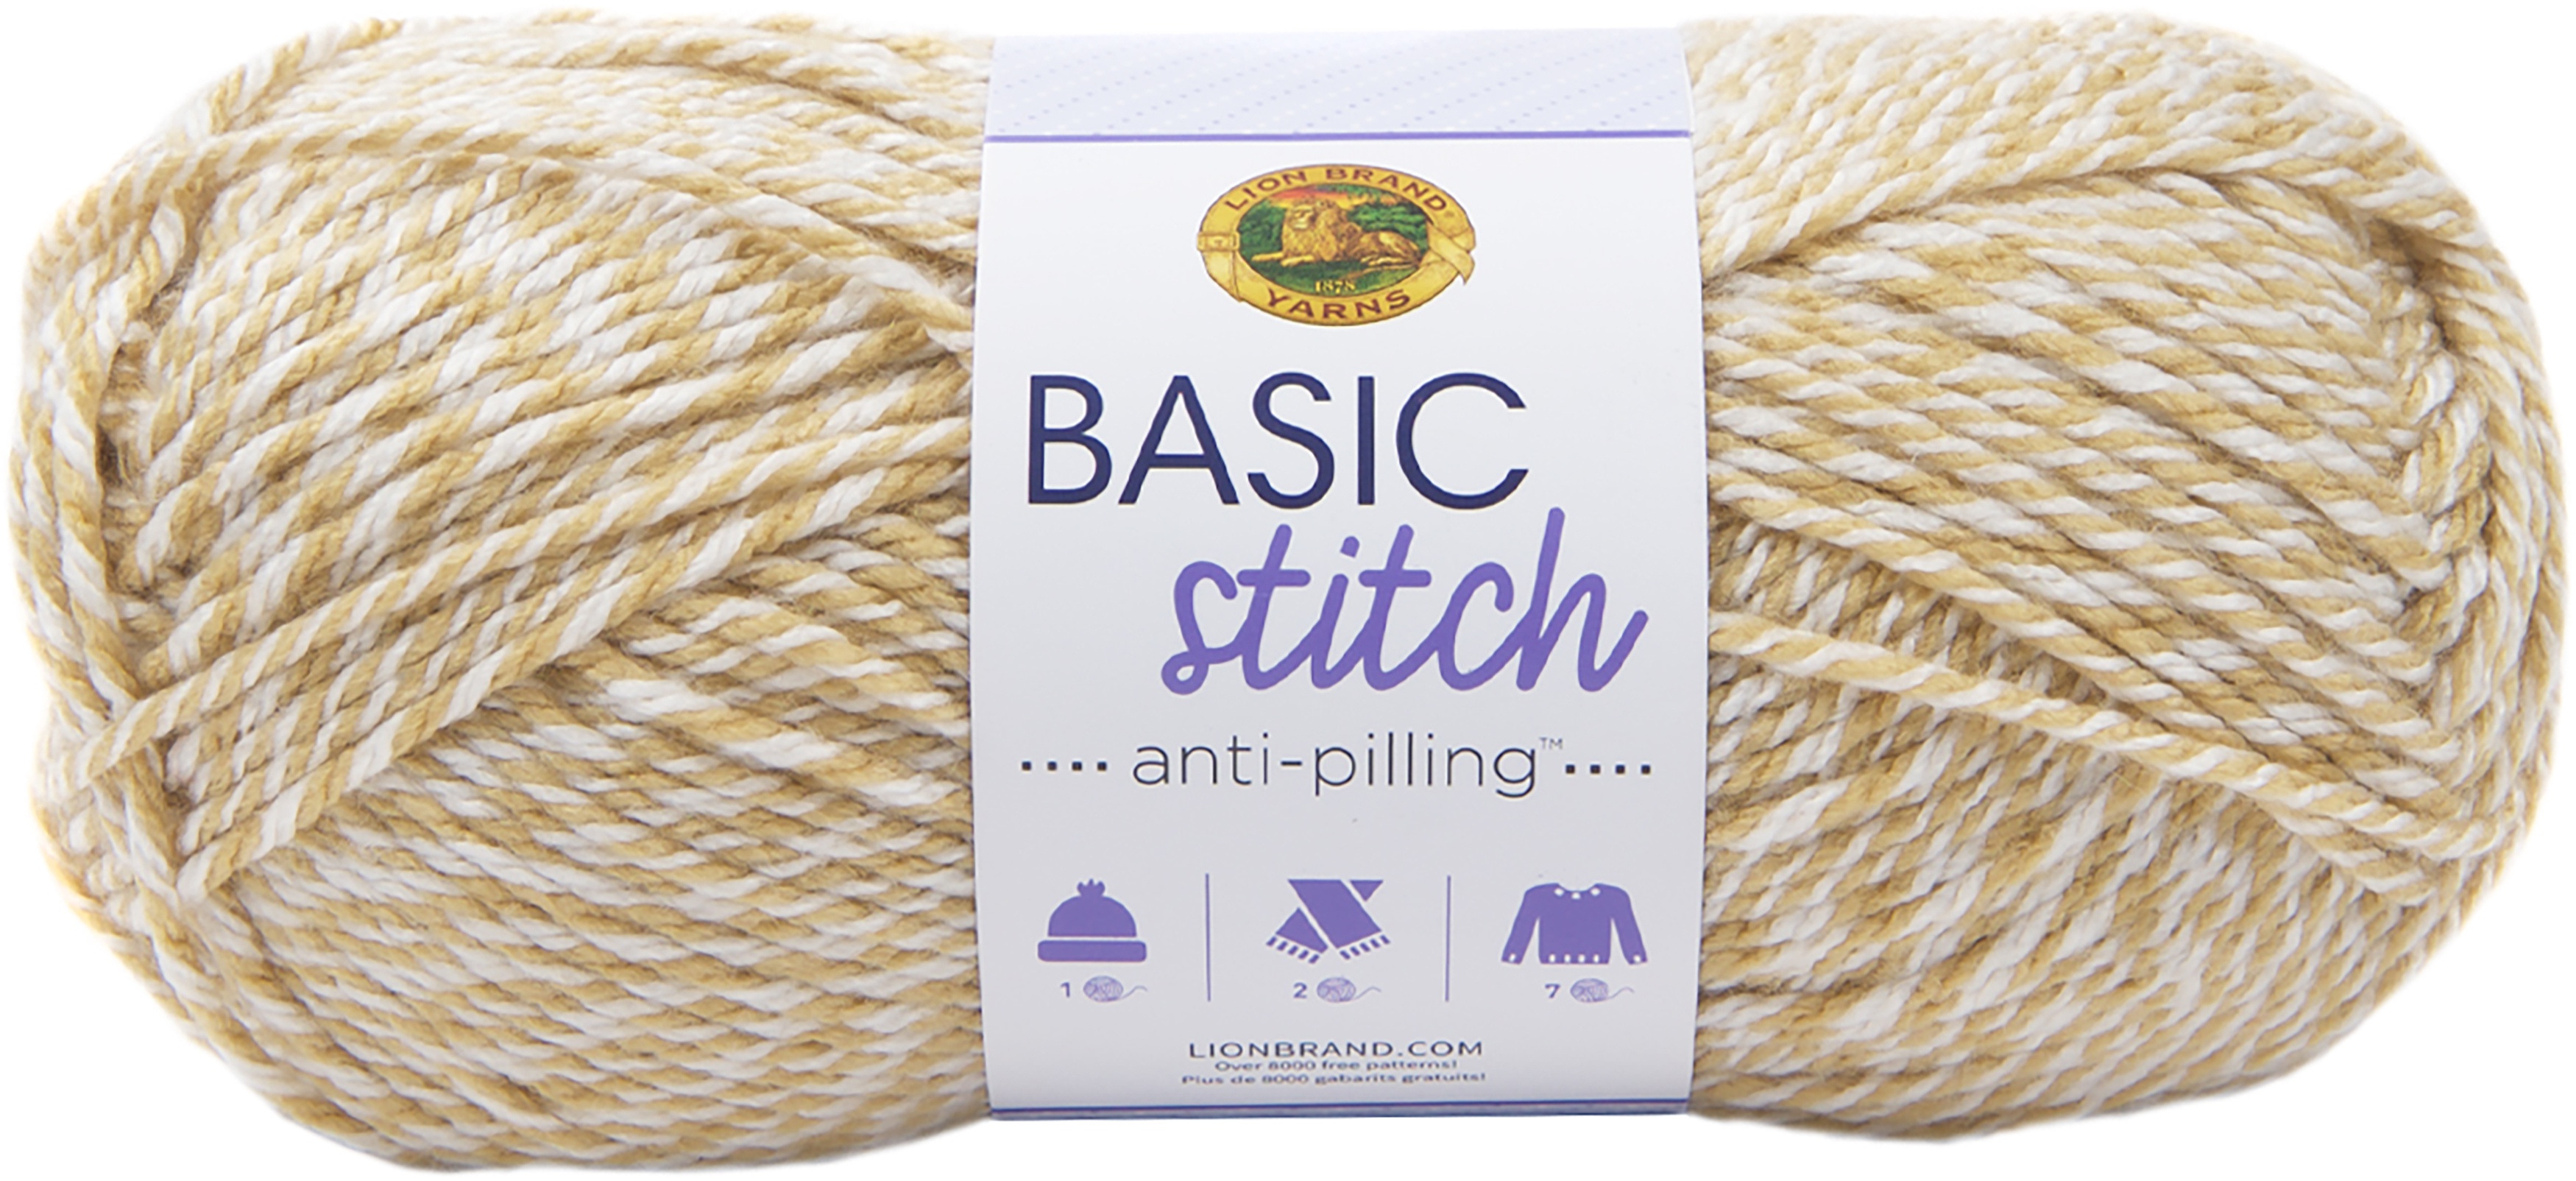 Lion Brand Yarn Basic Stitch Anti Pilling Tan White Ebay